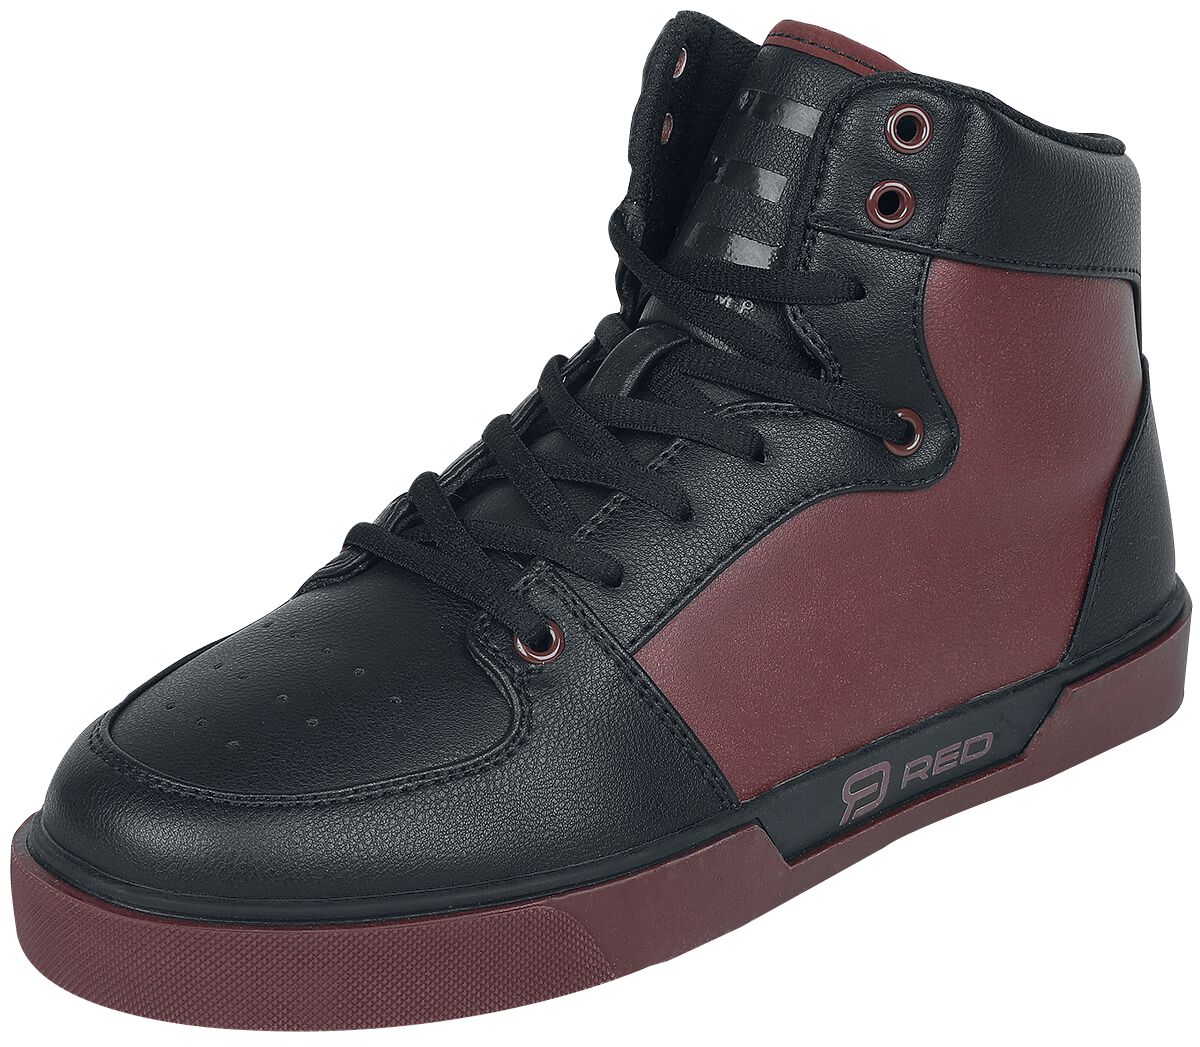 RED by EMP - HighCut Sneaker - Sneaker high - schwarz|rot - EMP Exklusiv!